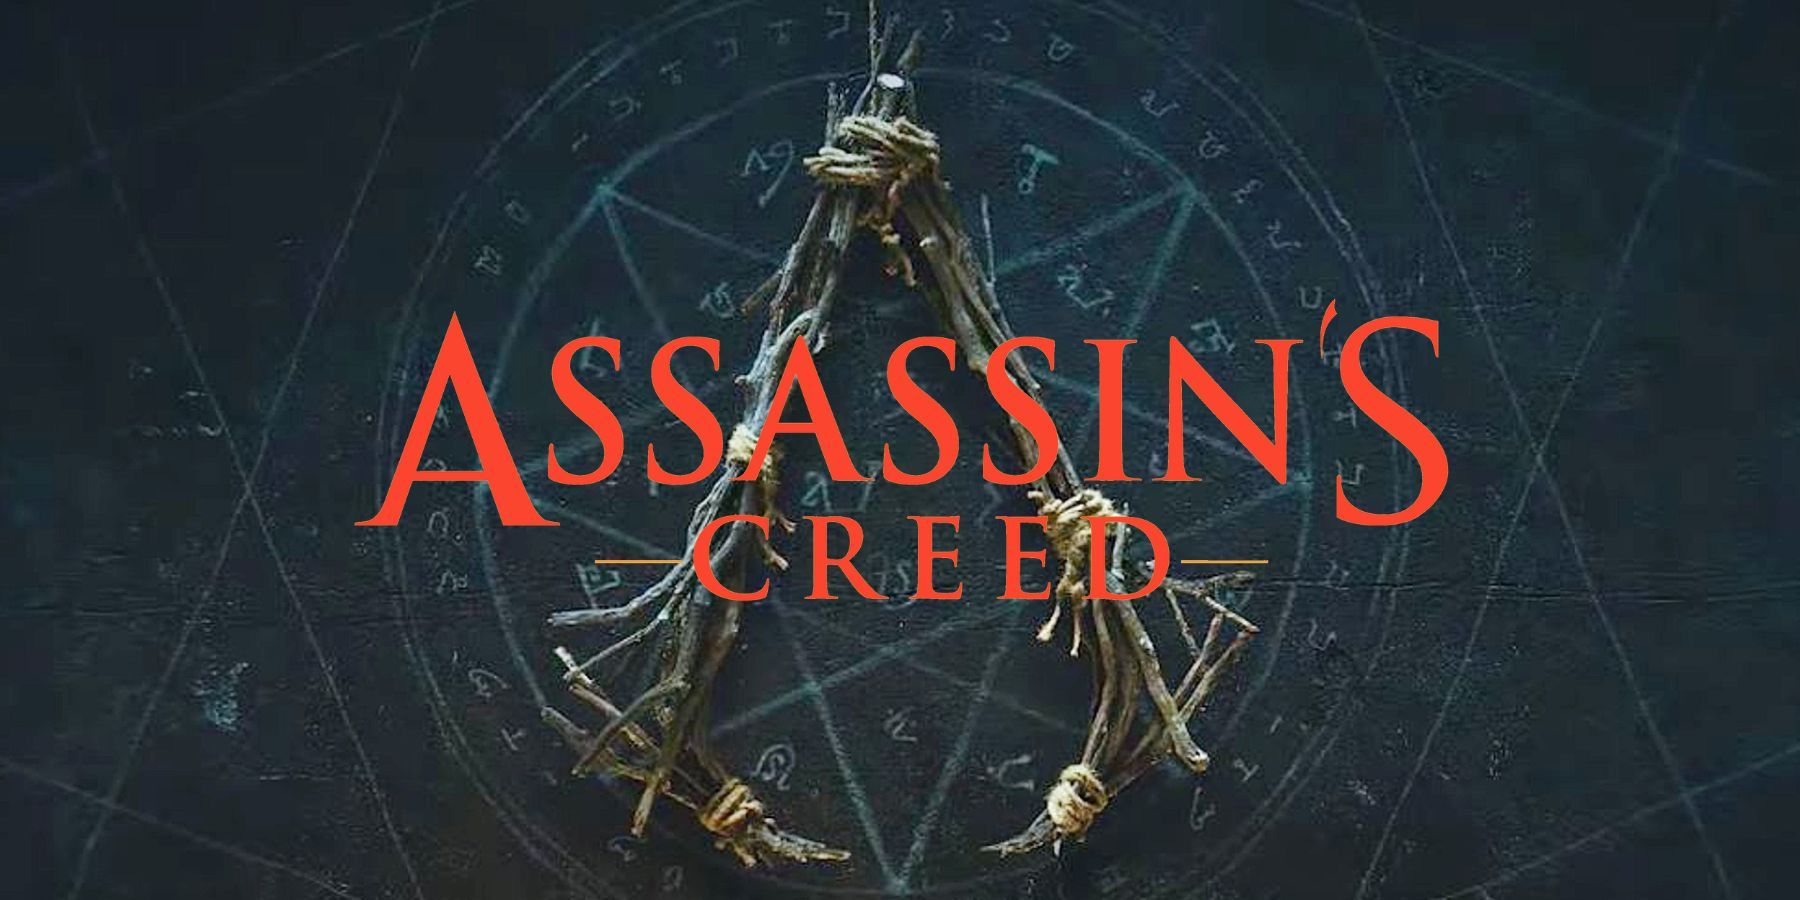 Assassin's creed hexe logo